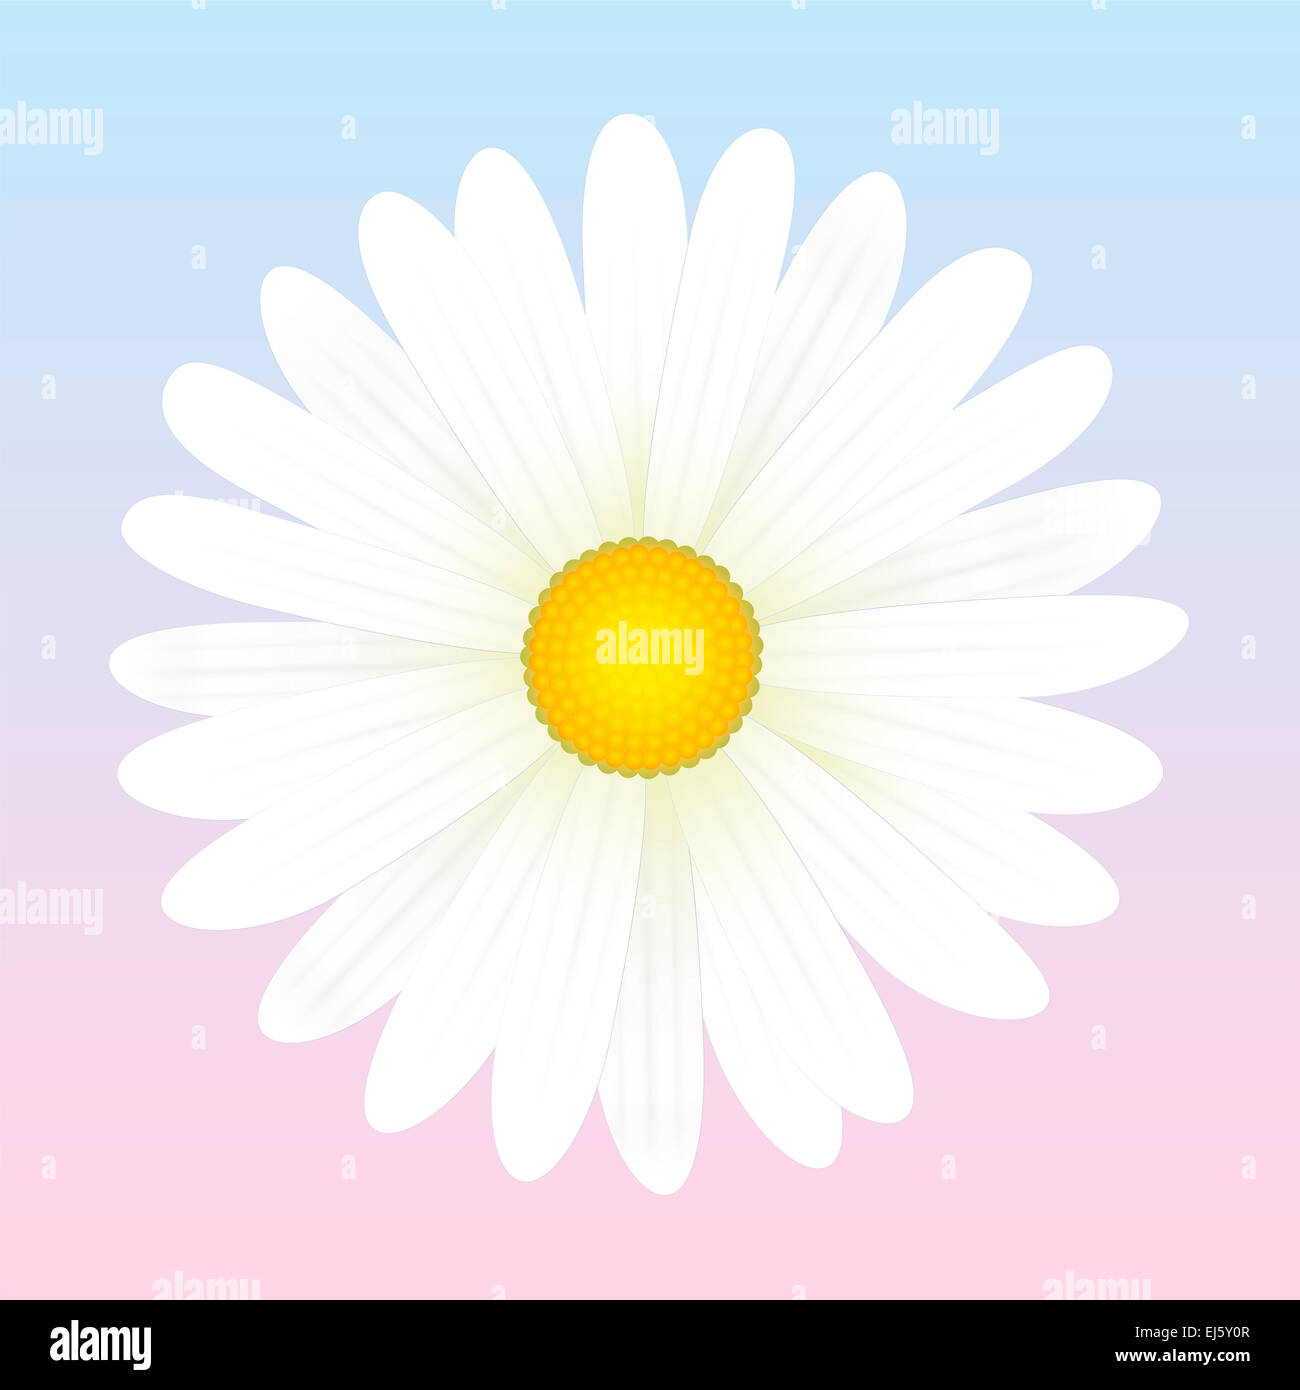 White daisy flower illustration on light pink to blue background. Stock Photo